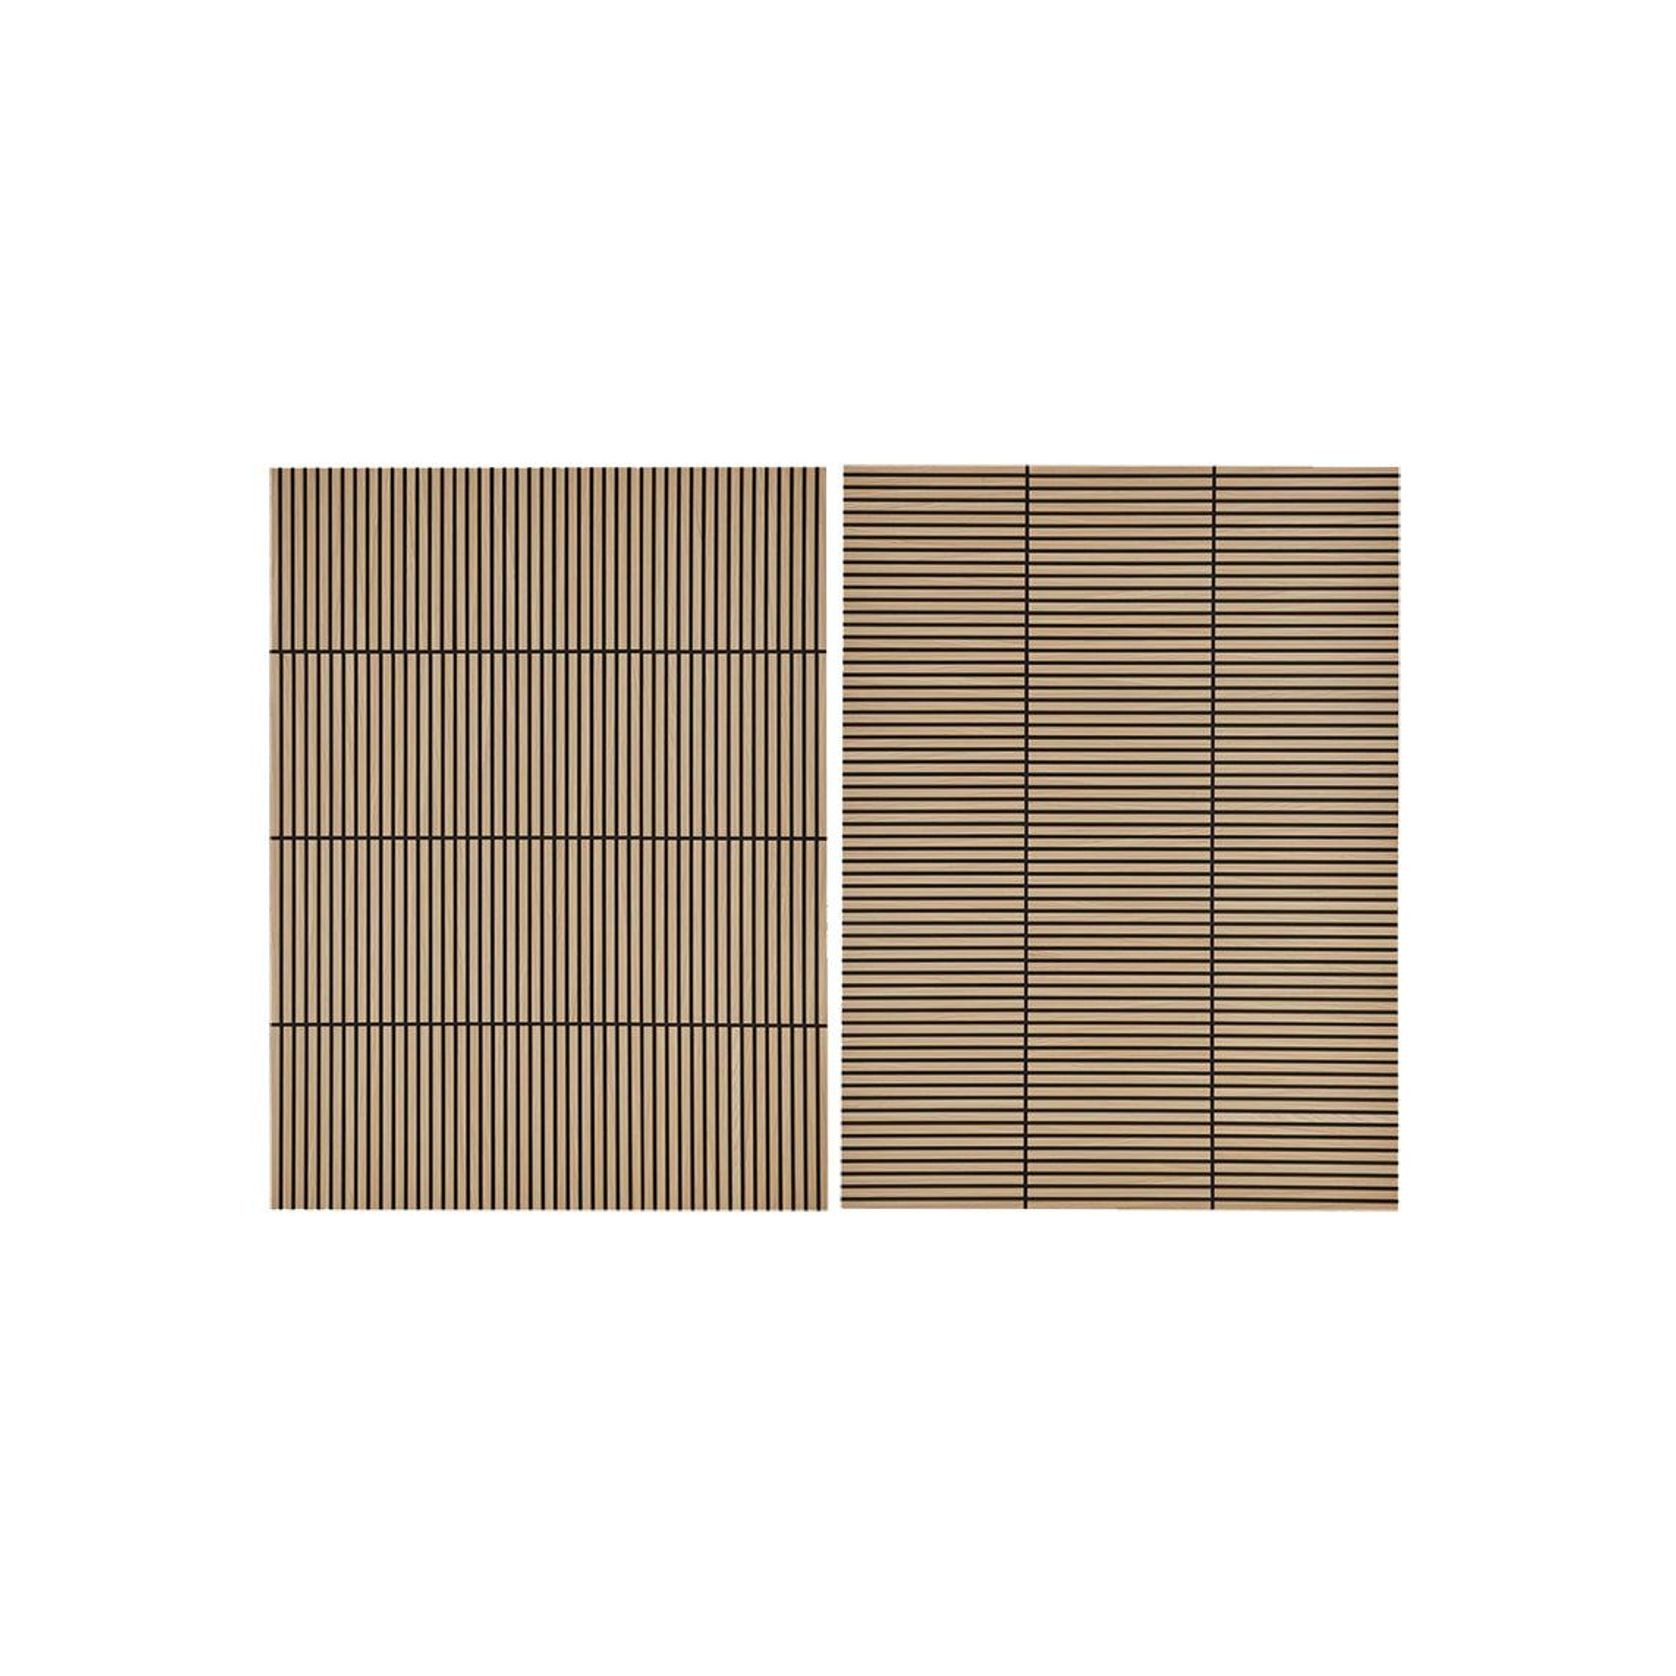 Square WOODFLEX Acoustic Wood Slat Wall Tiles - Oak Veneer - 4pc Set gallery detail image